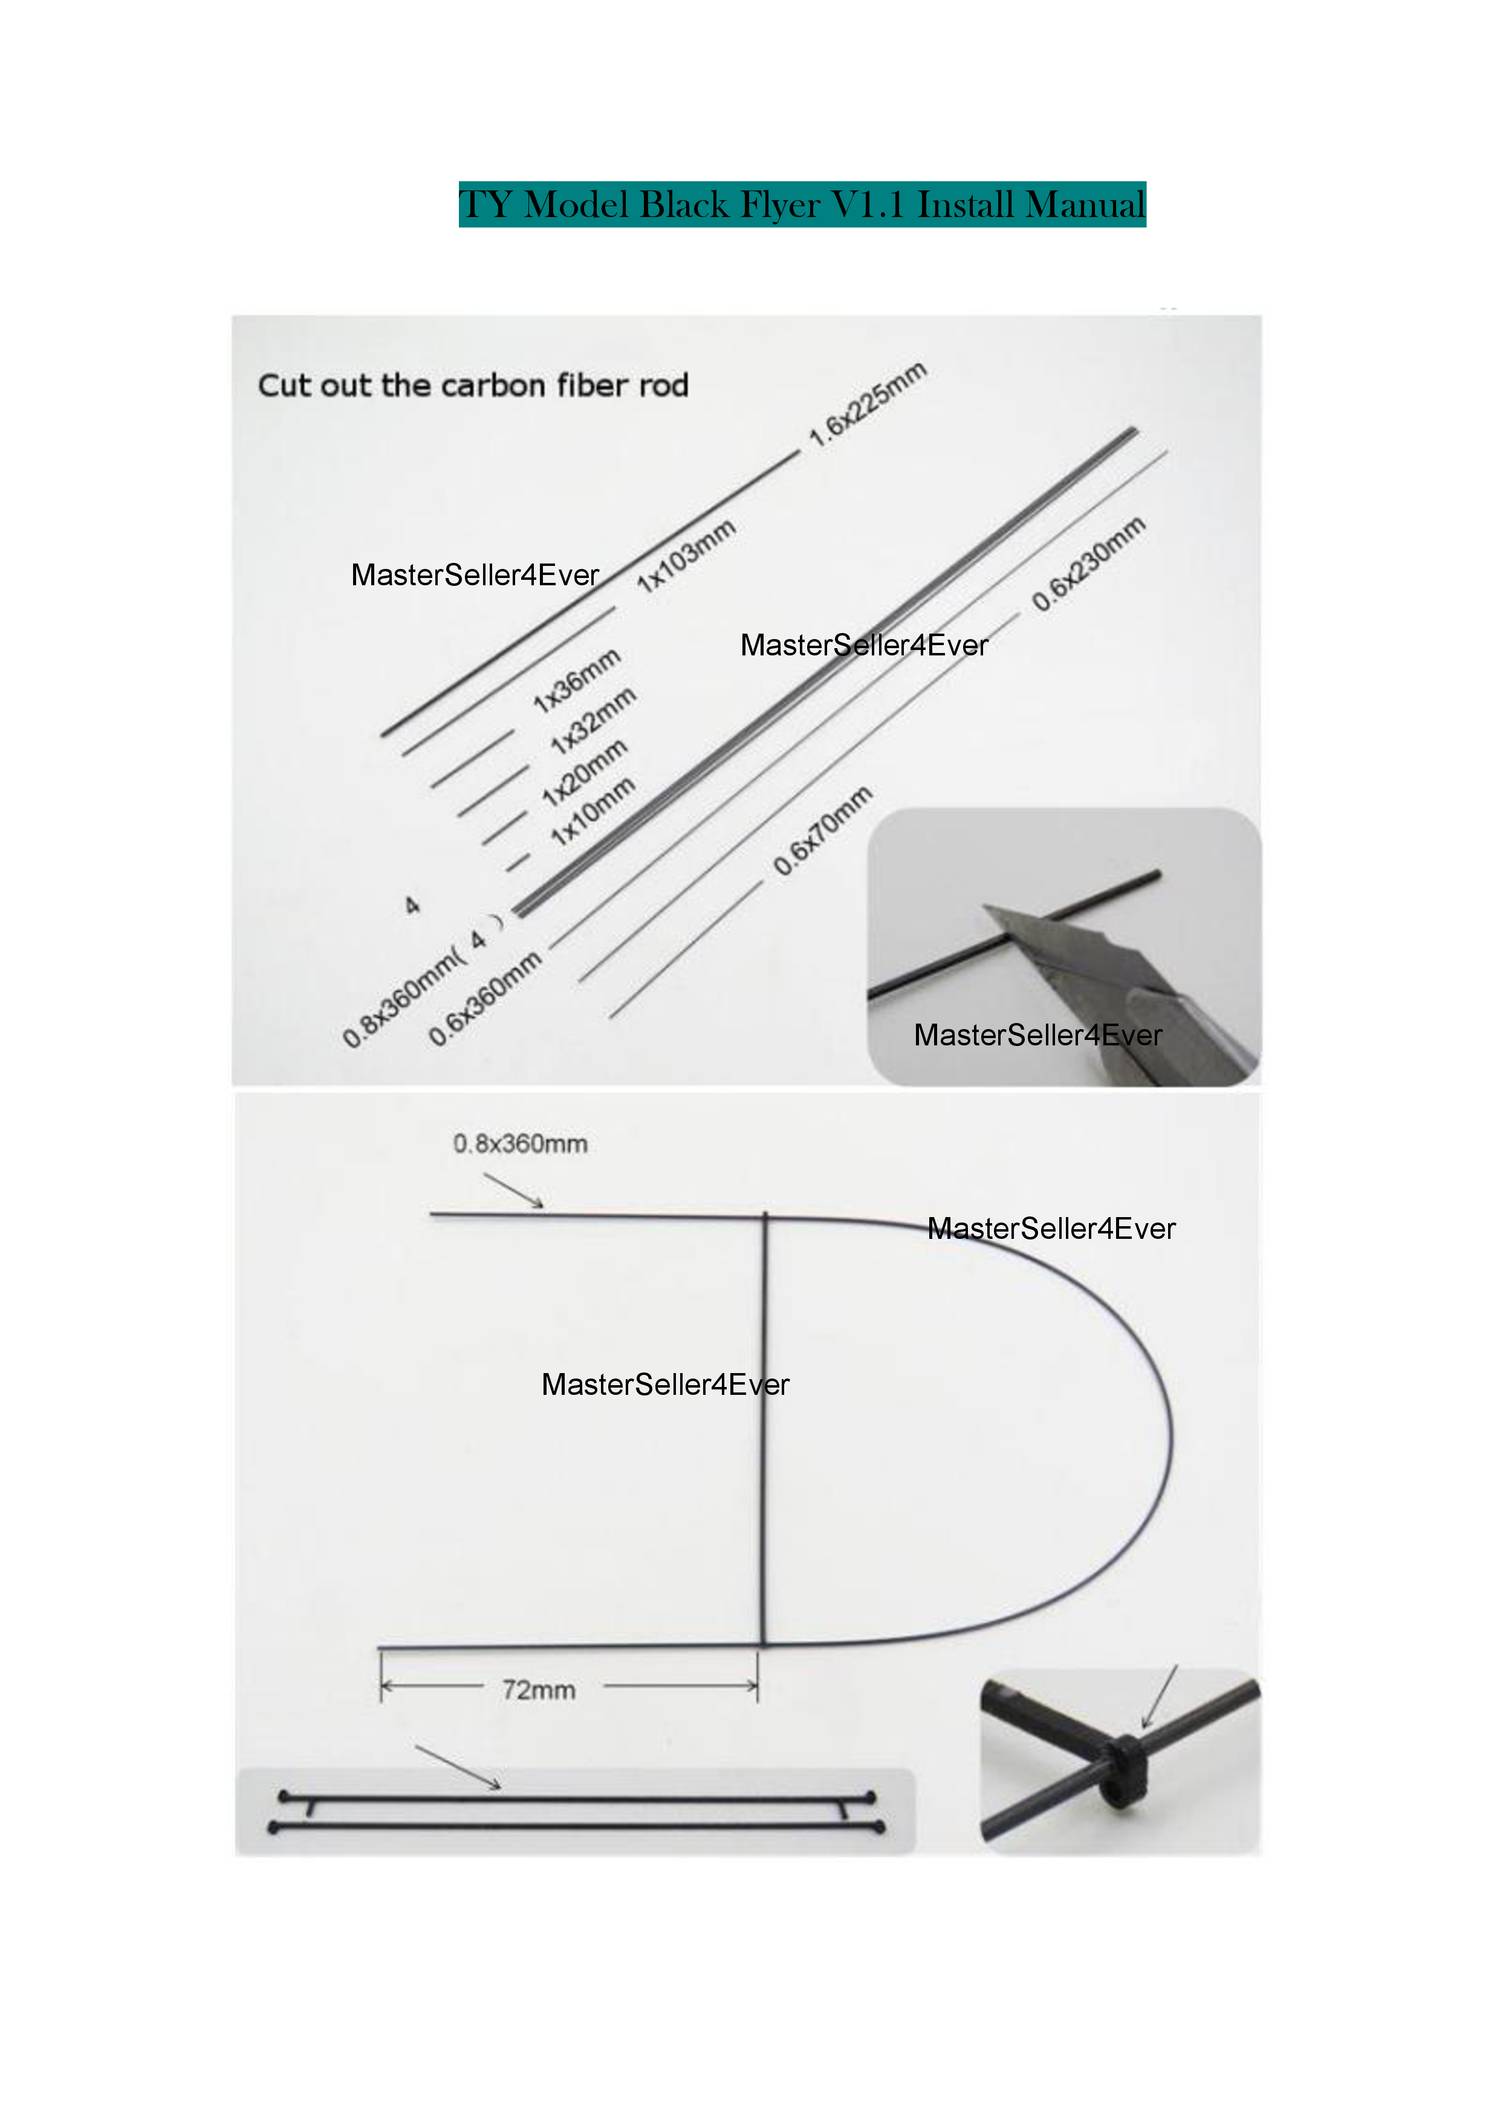 ty model black flyer v2 carbon fiber film rc airplane with power system